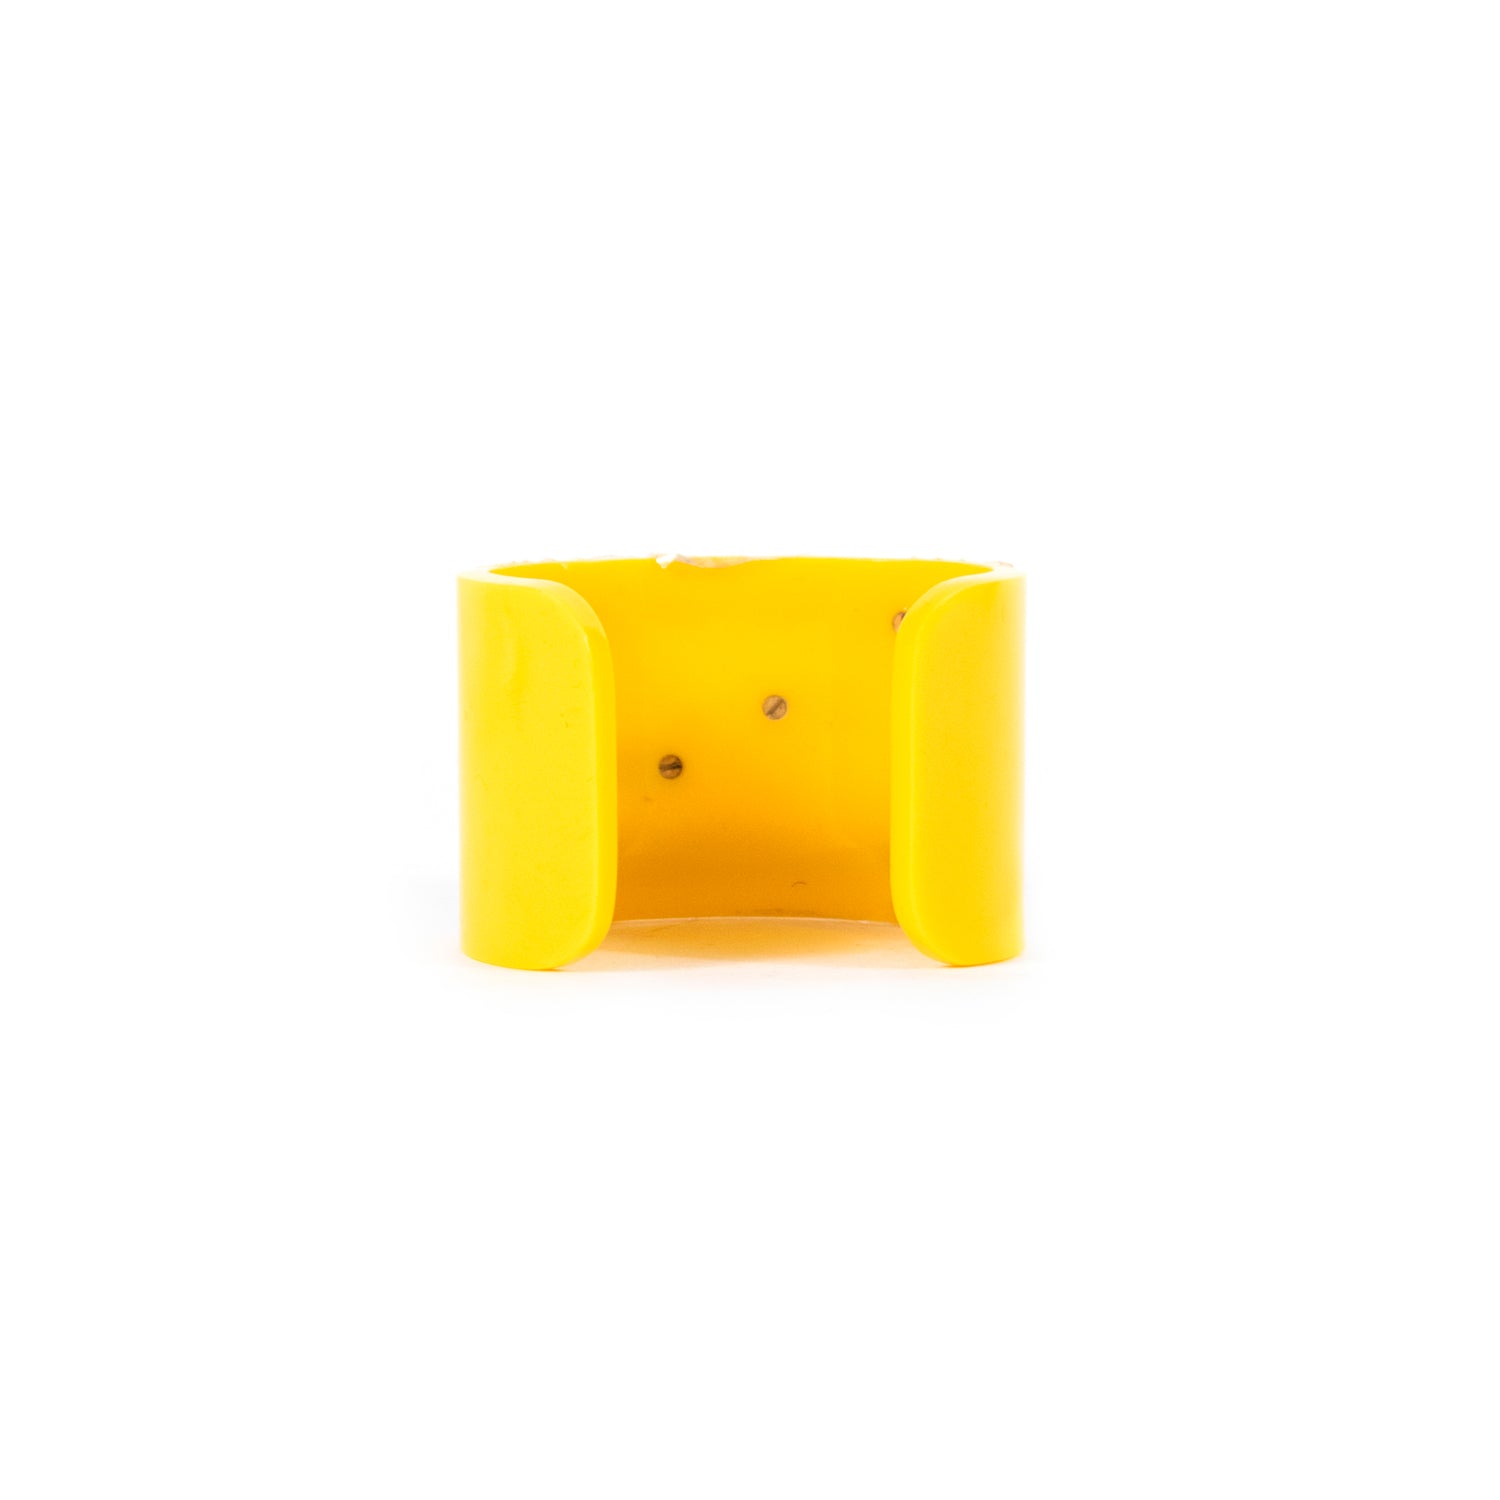 Fendi Yellow/Golden Cuff